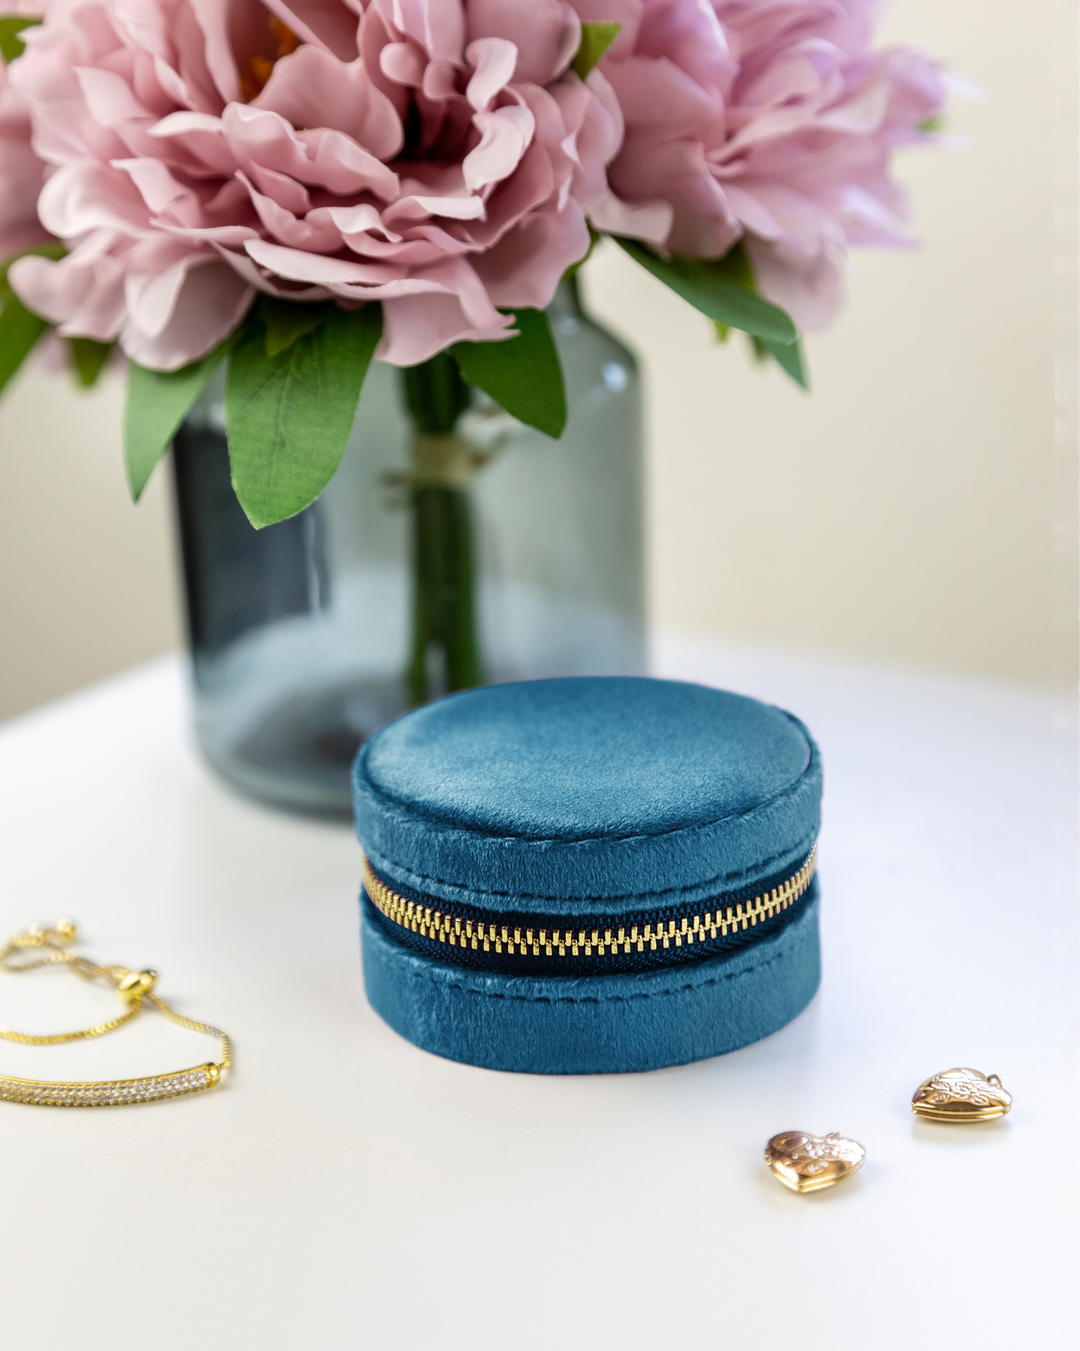 Benevolence La Plush Velvet Square Travel Jewelry Box with Mirror- Periwinkle Blue